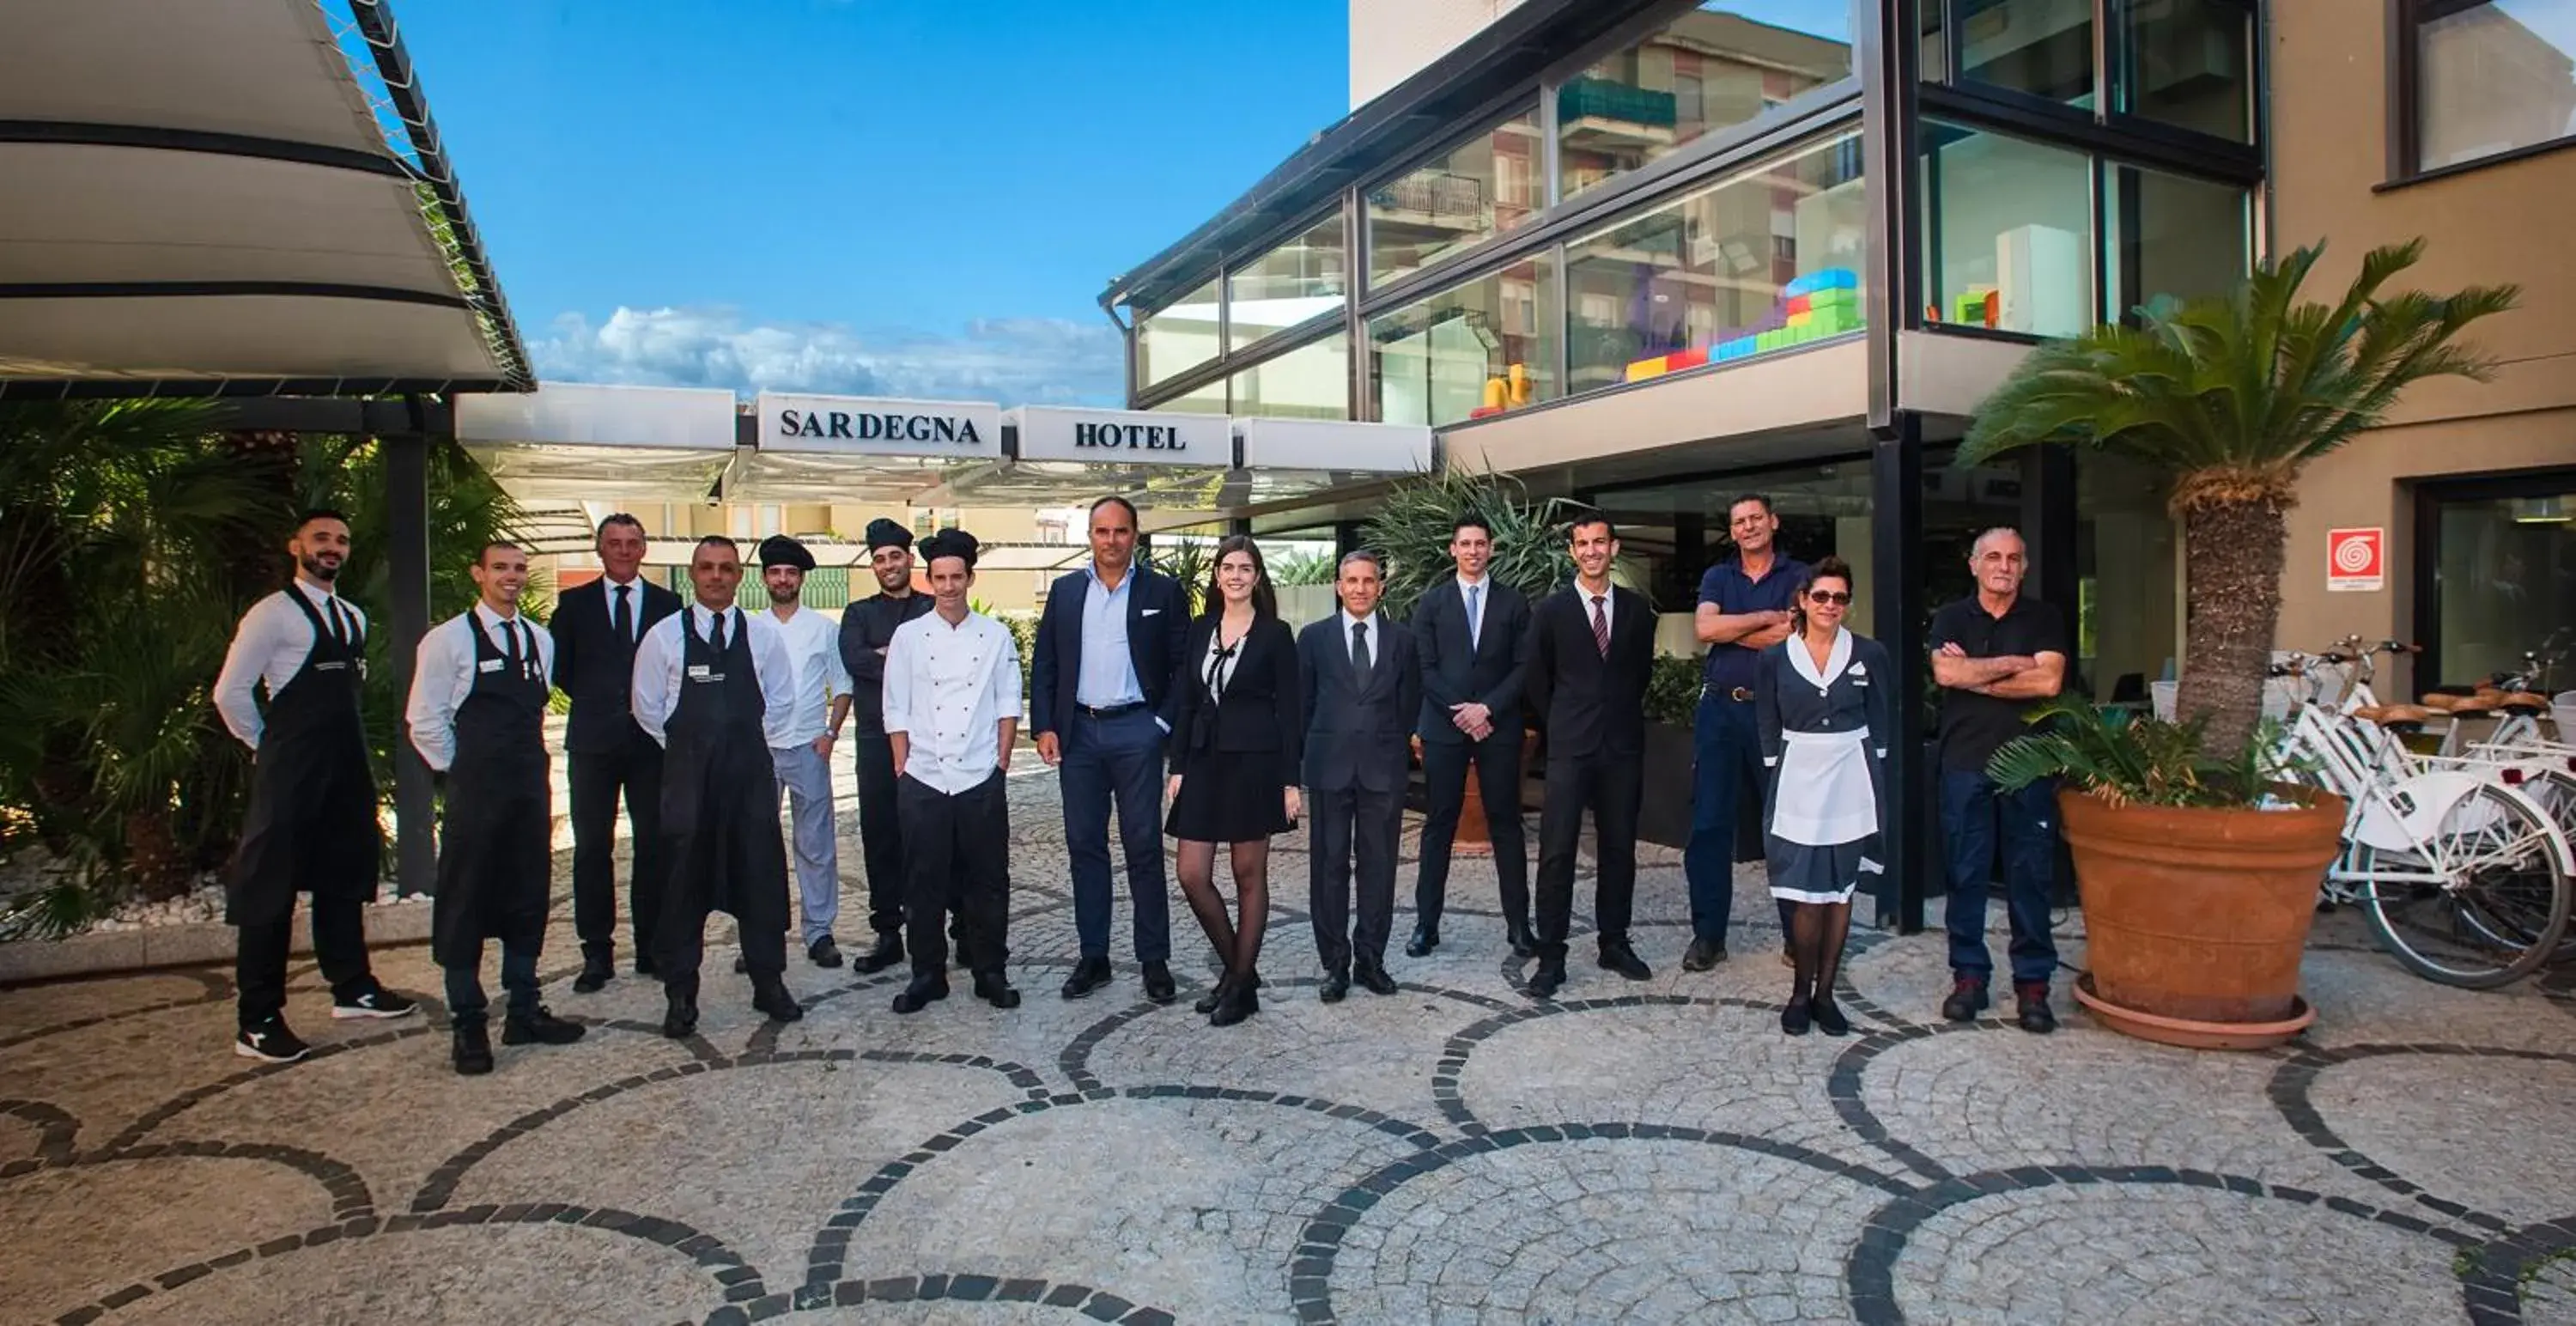 Staff in Sardegna Hotel - Suites & Restaurant